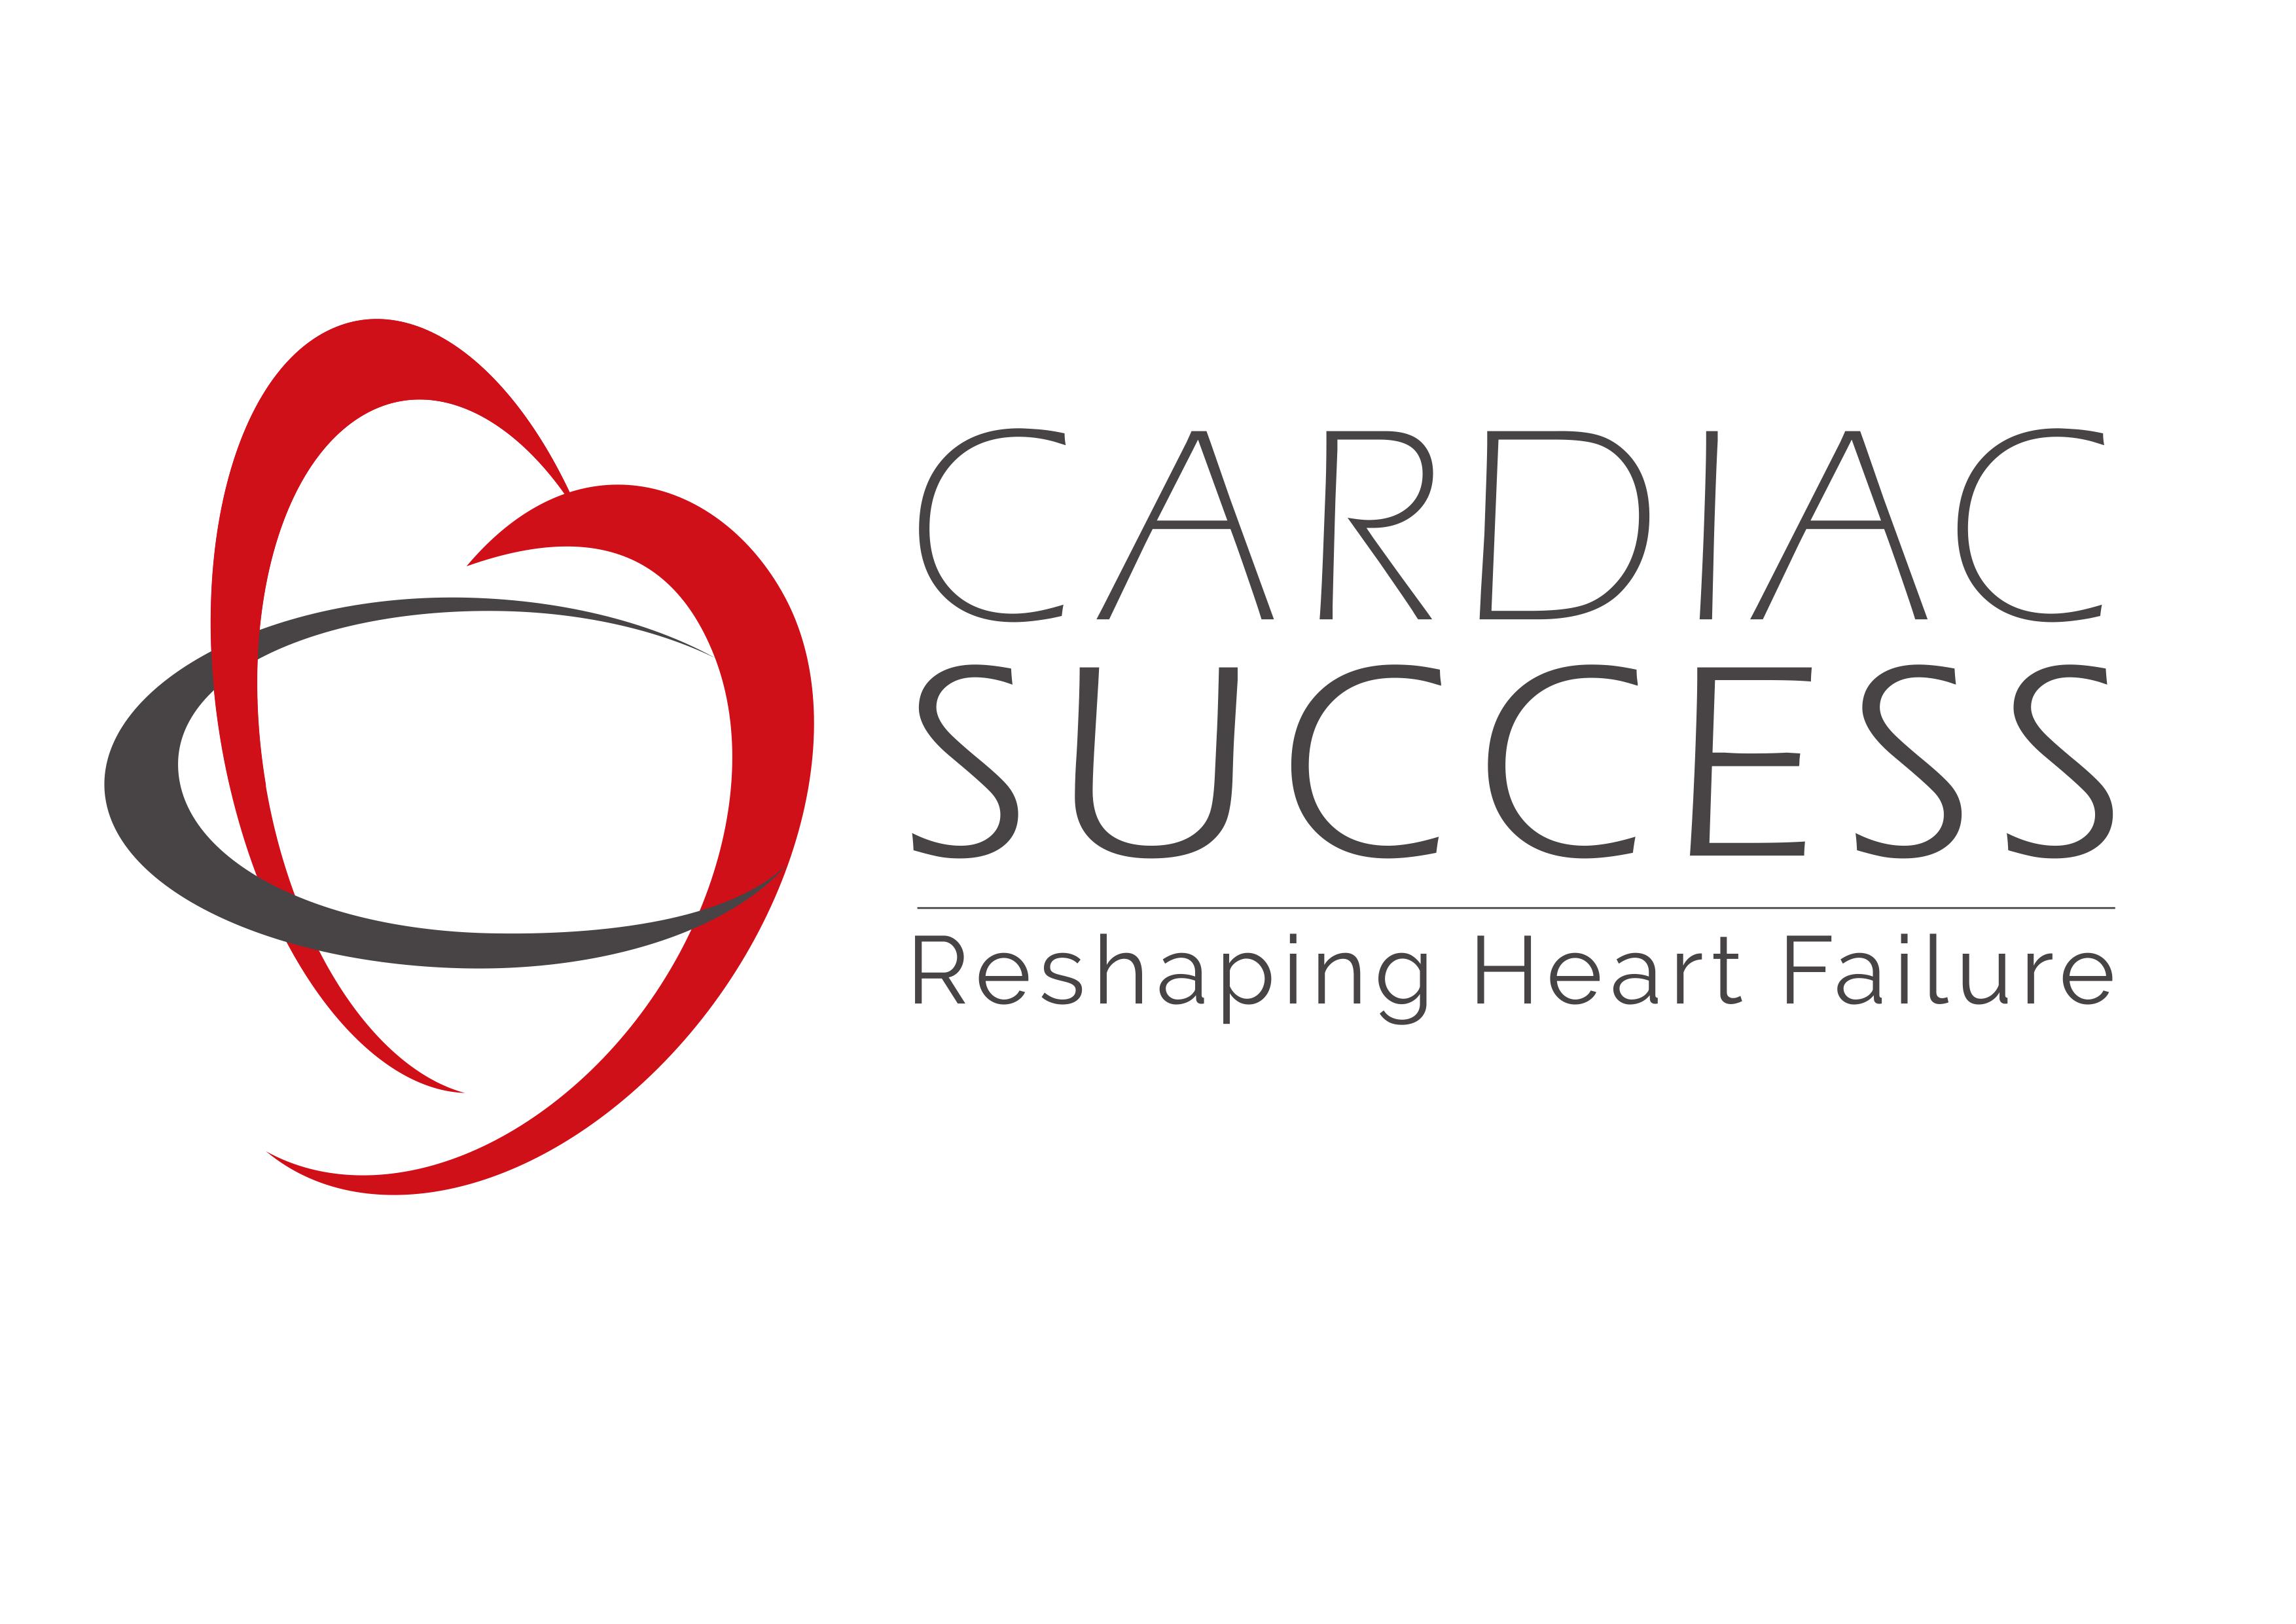 Cardiac Success logo